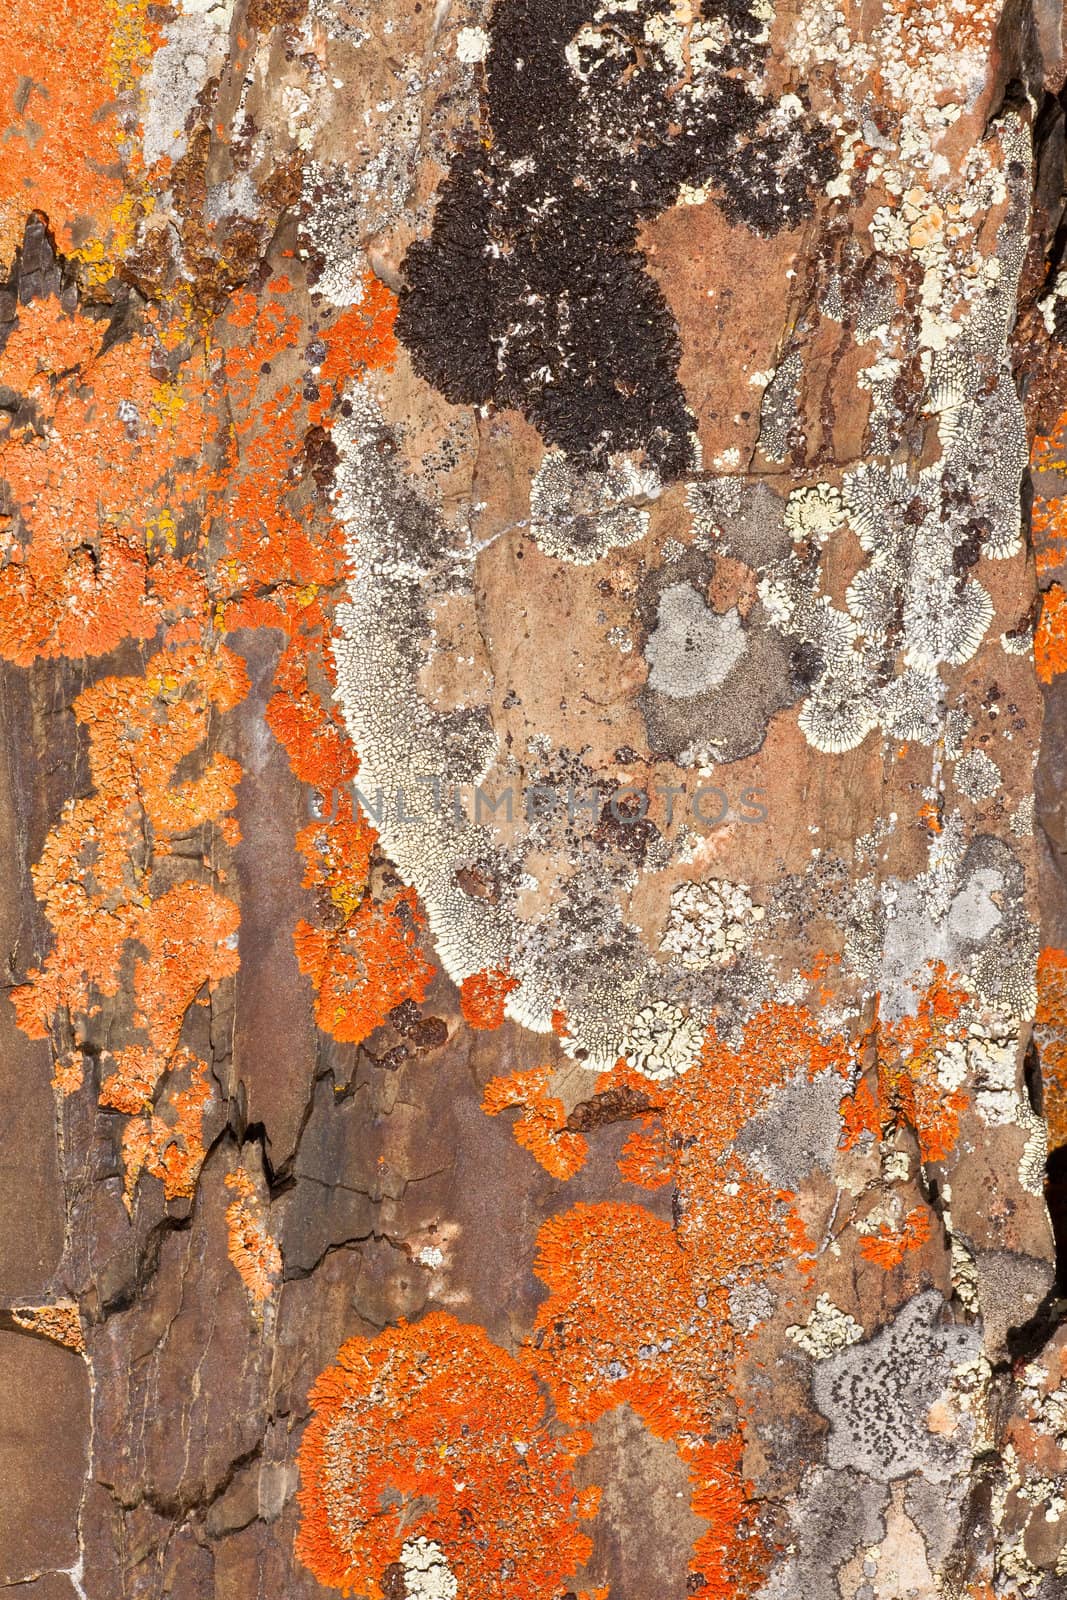 Rock Lichens Background Pattern by PiLens